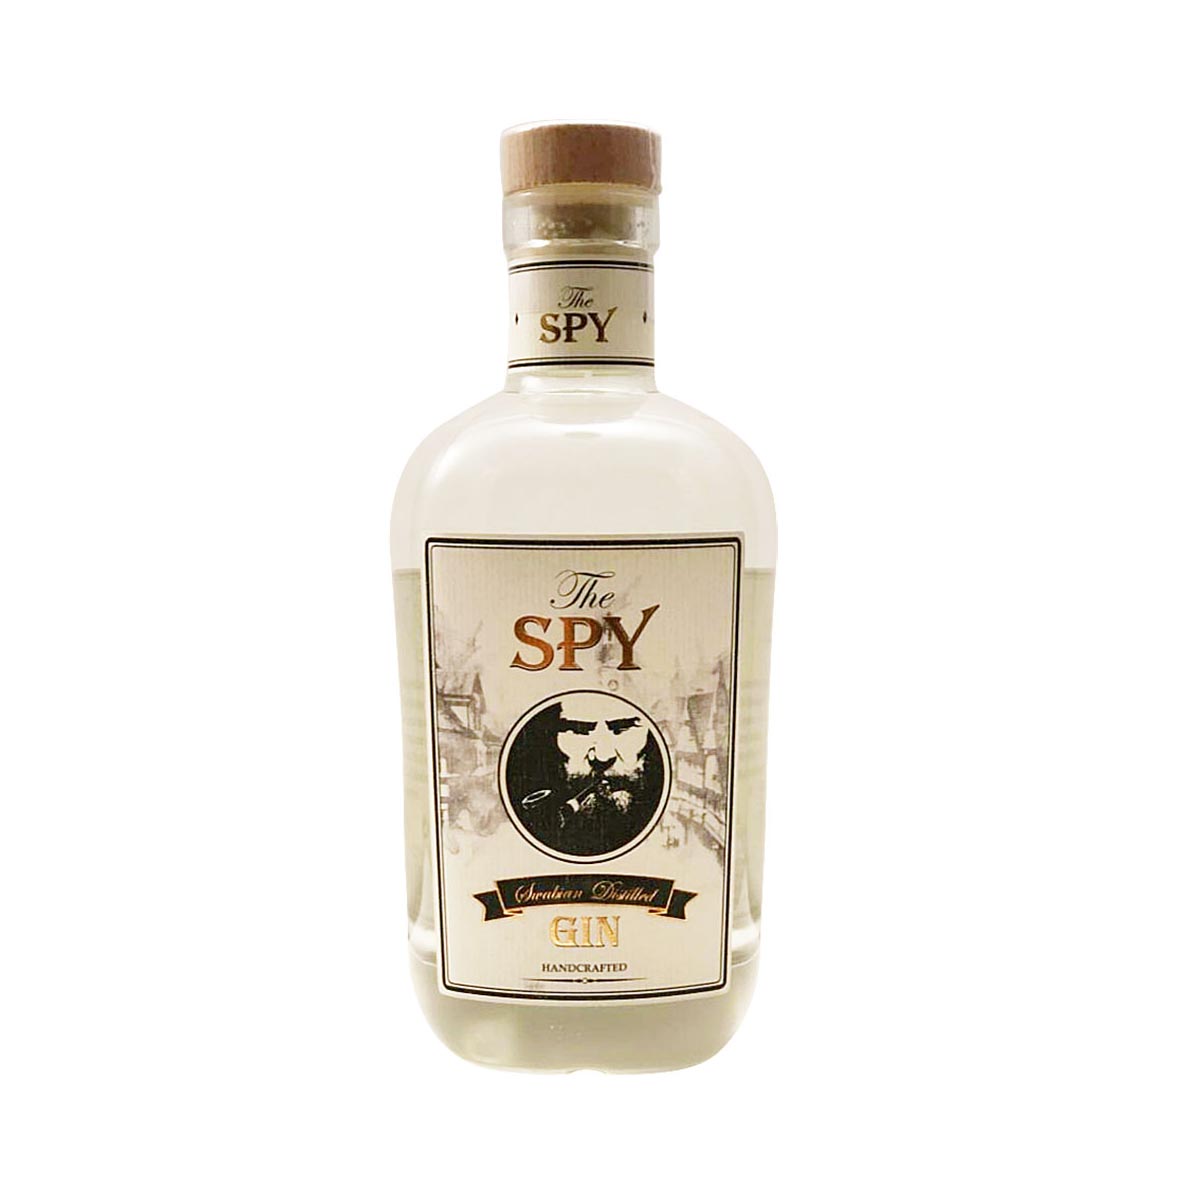  The SPY Gin Miniature